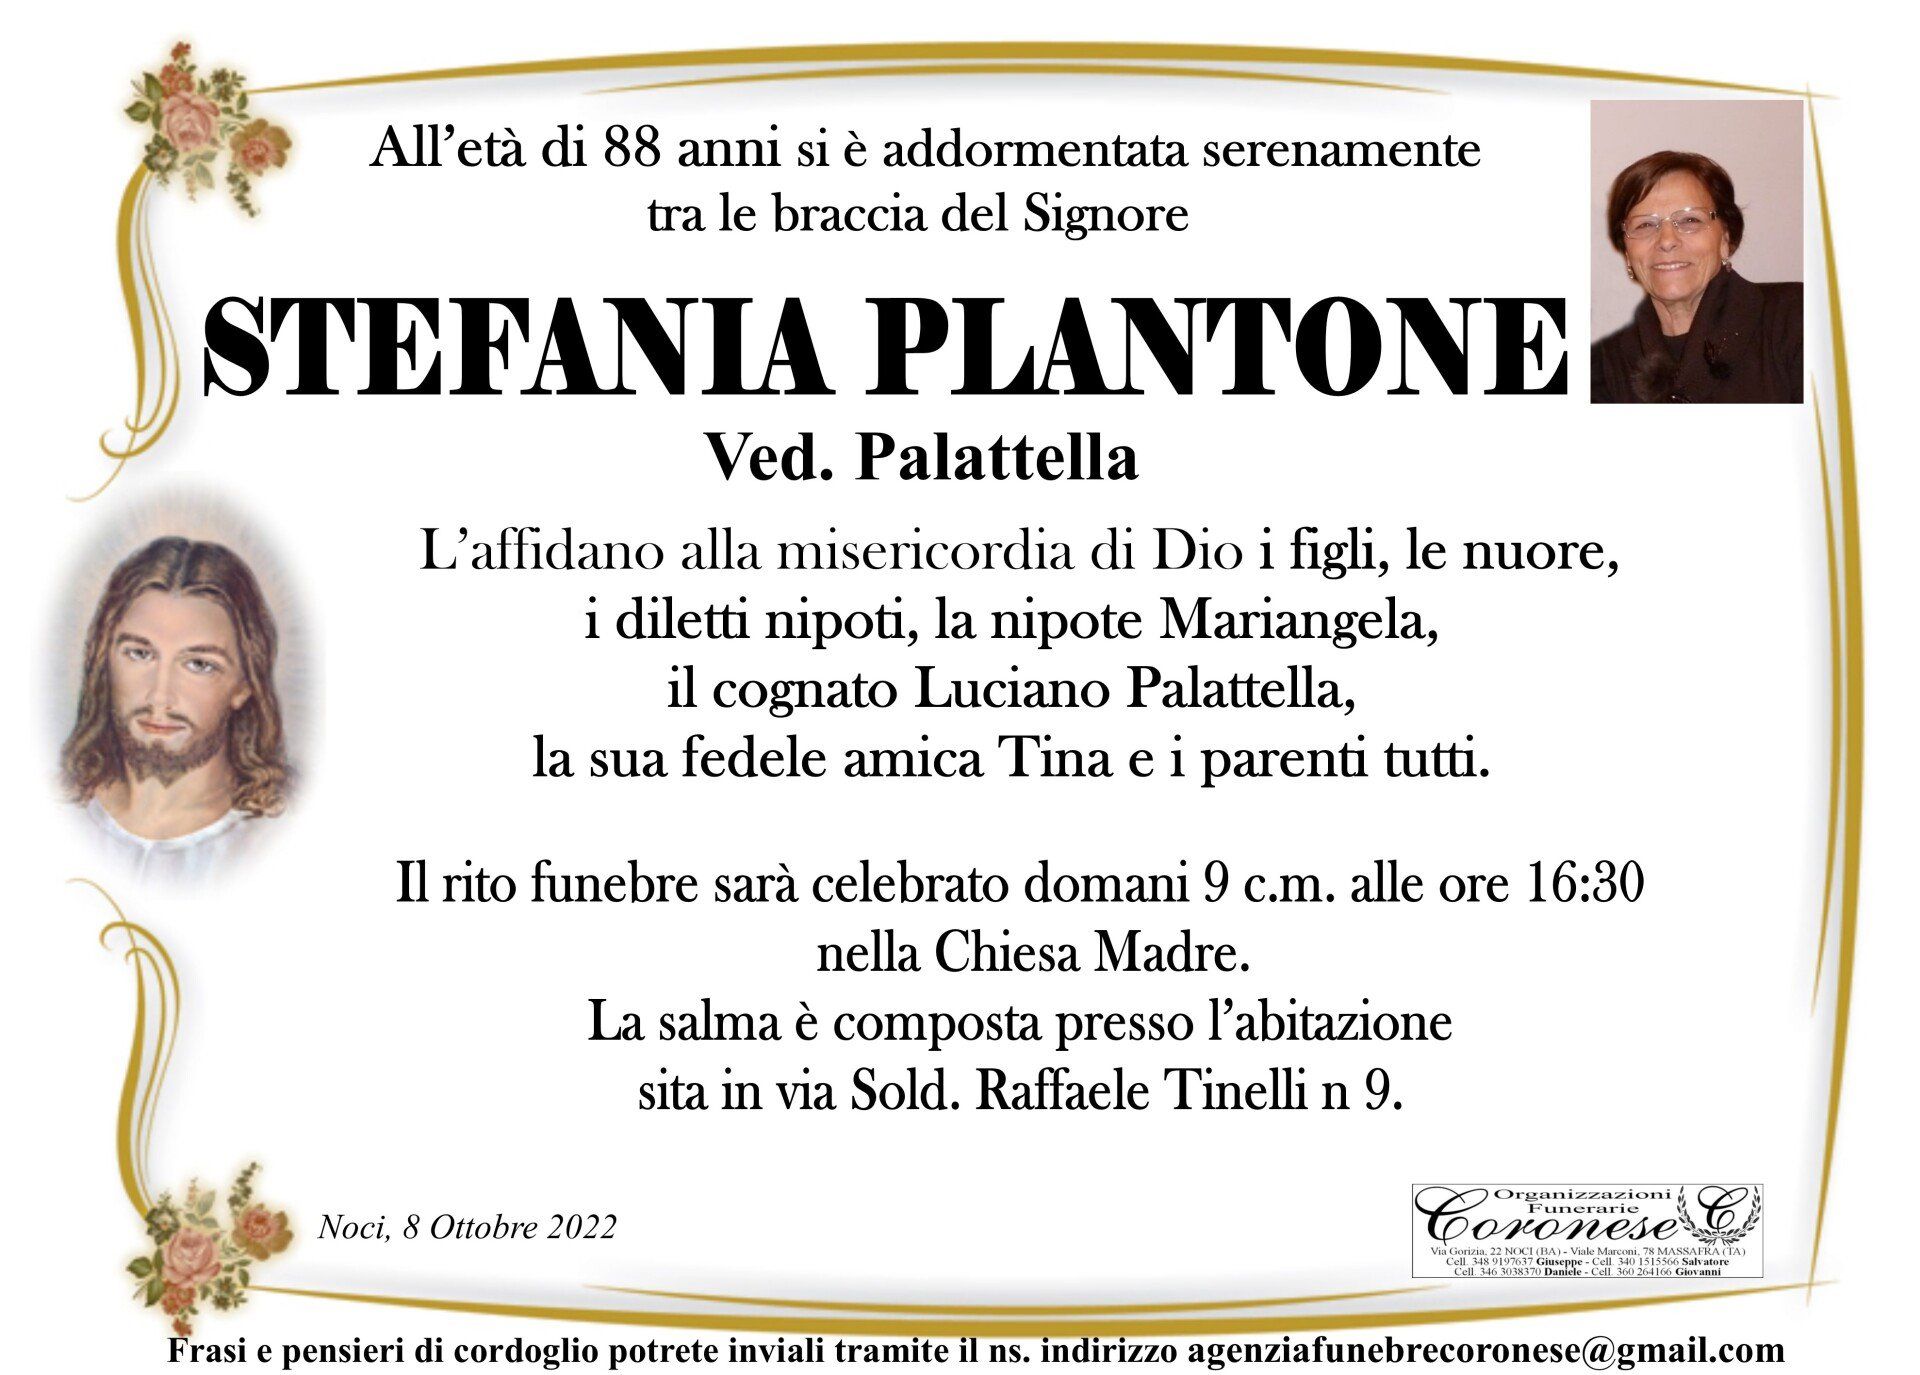 necrologio STEFANIA PLANTONE Ved: PALATTELLA